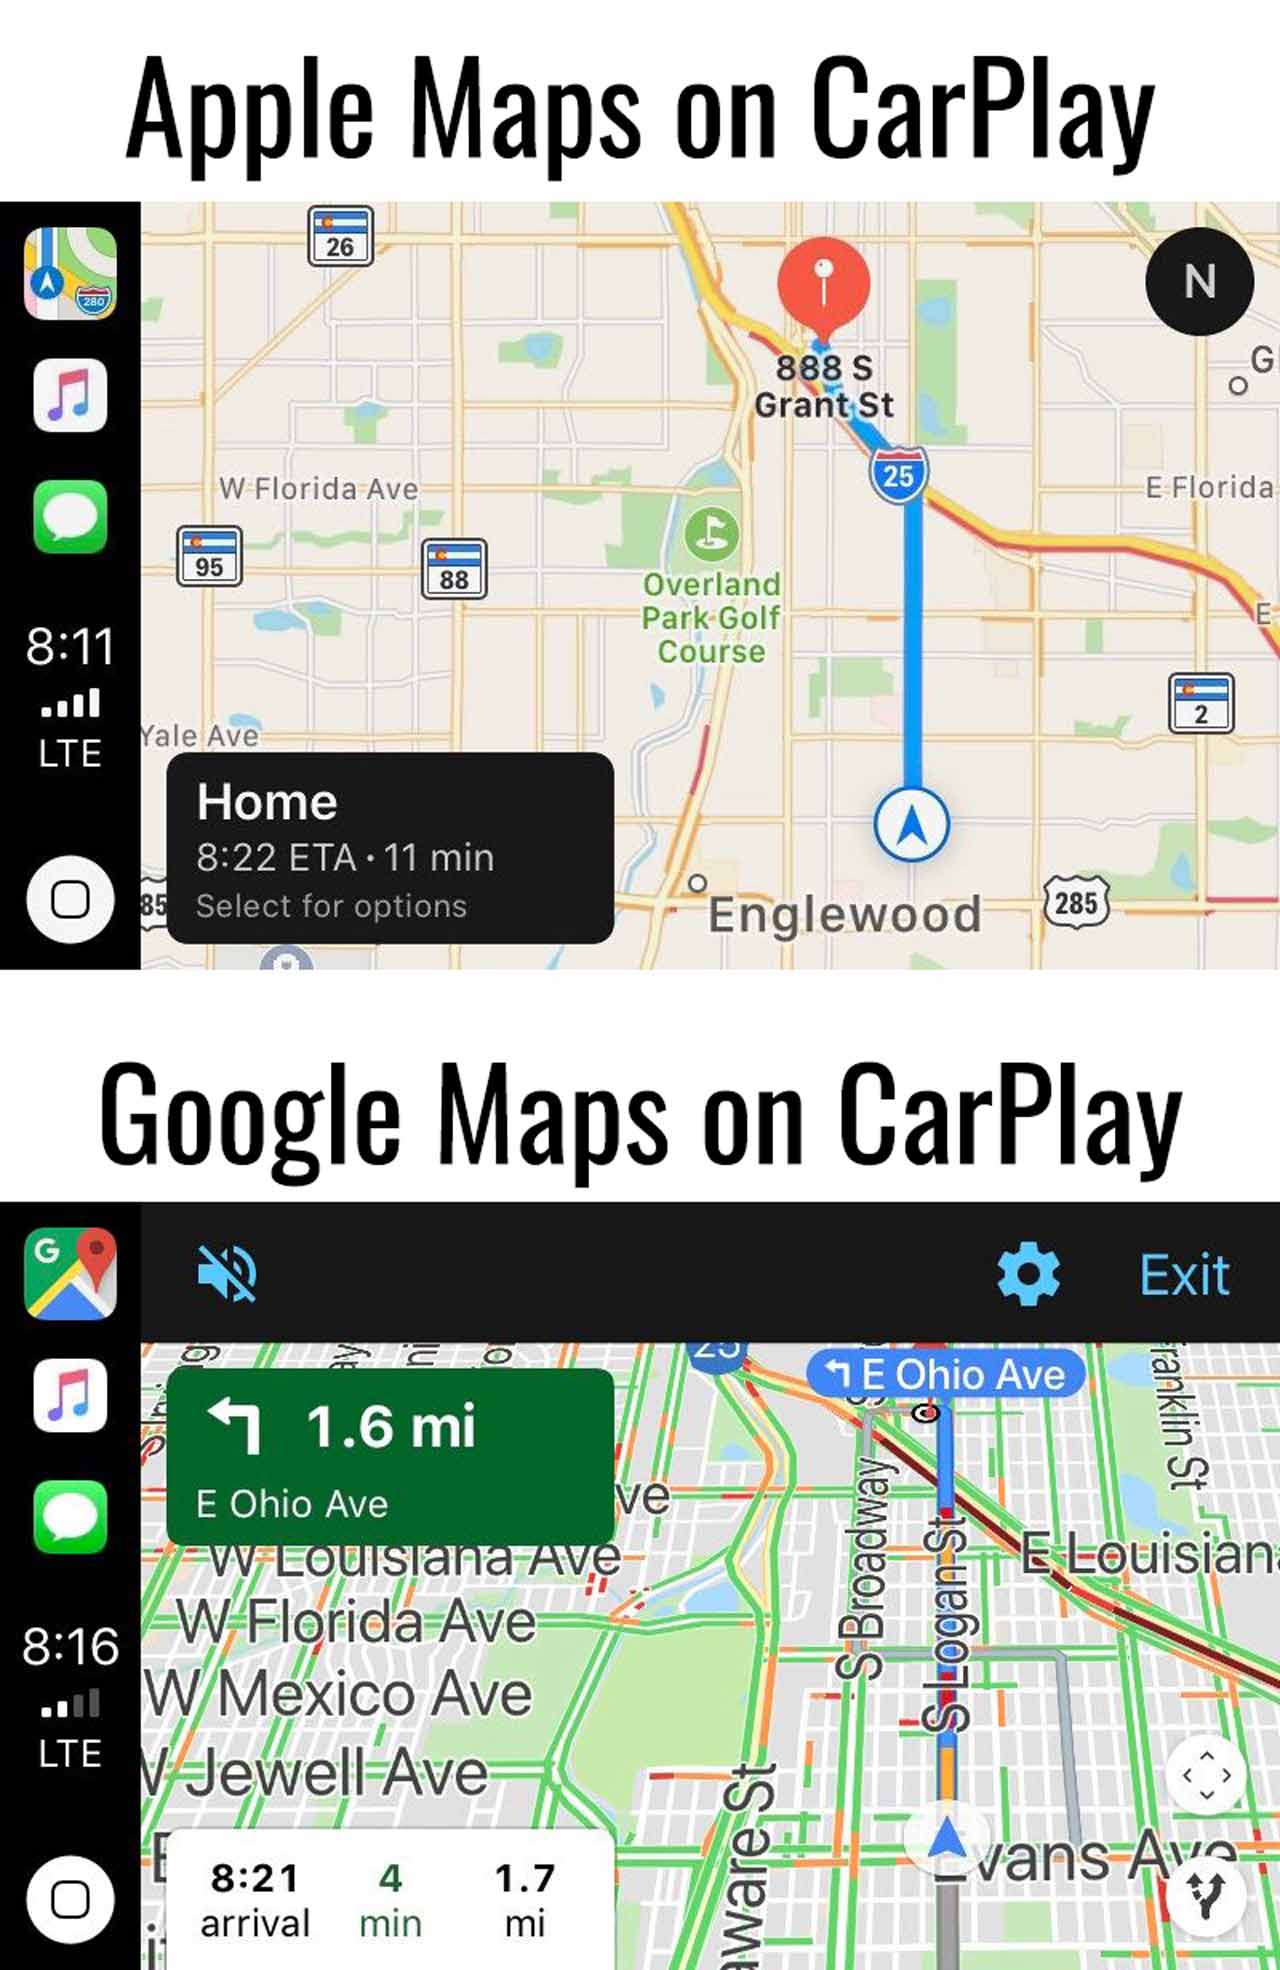 Apple Maps vs. Google Maps on CarPlay - basic visual differences